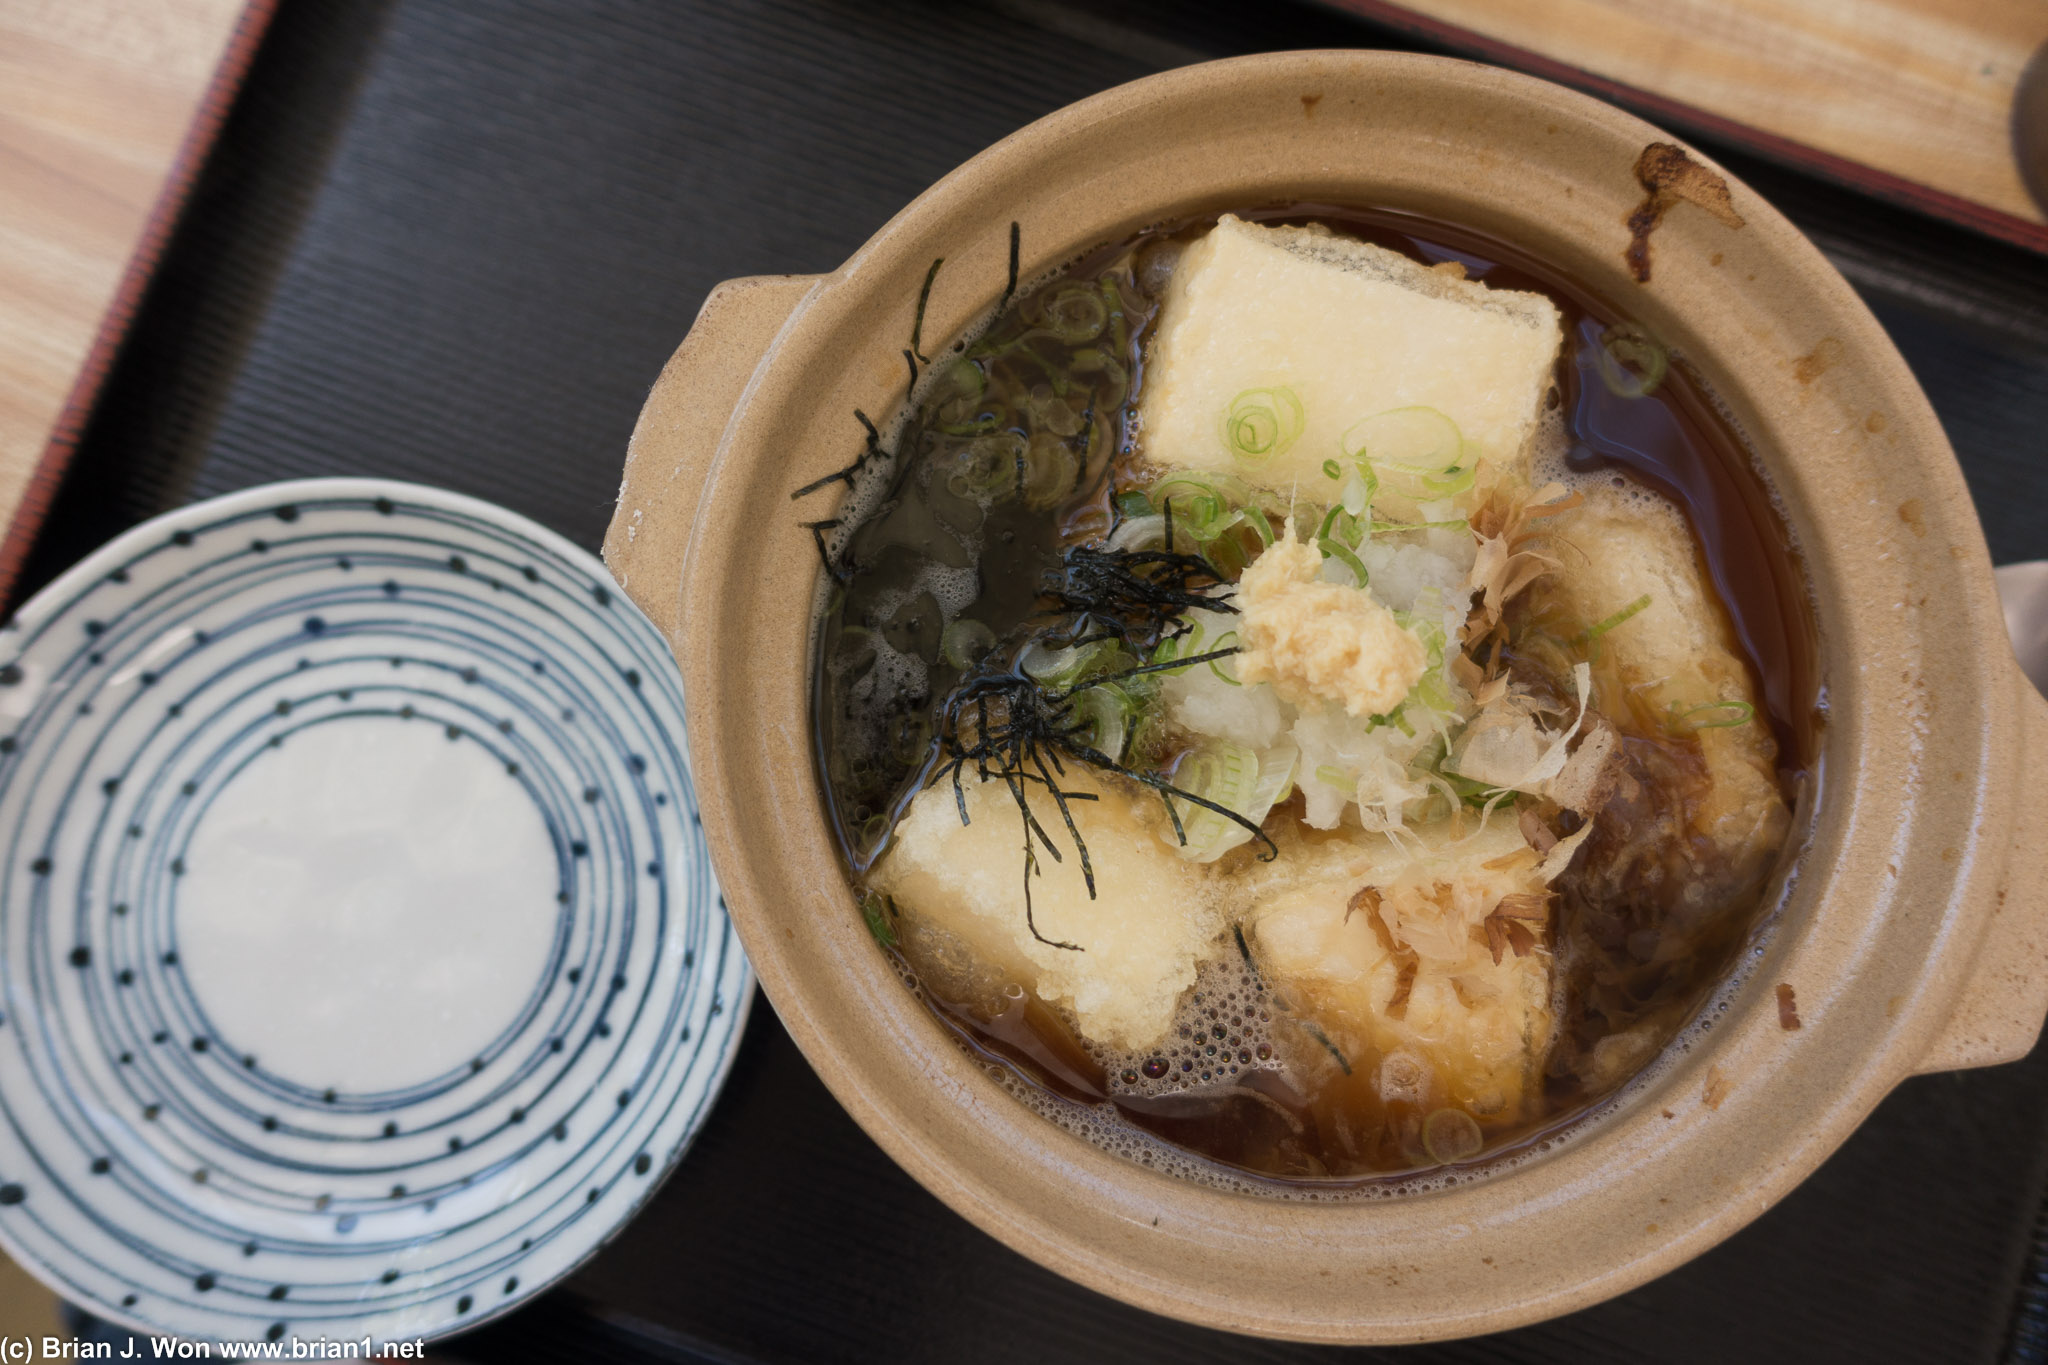 Agedashi tofu was excellent.